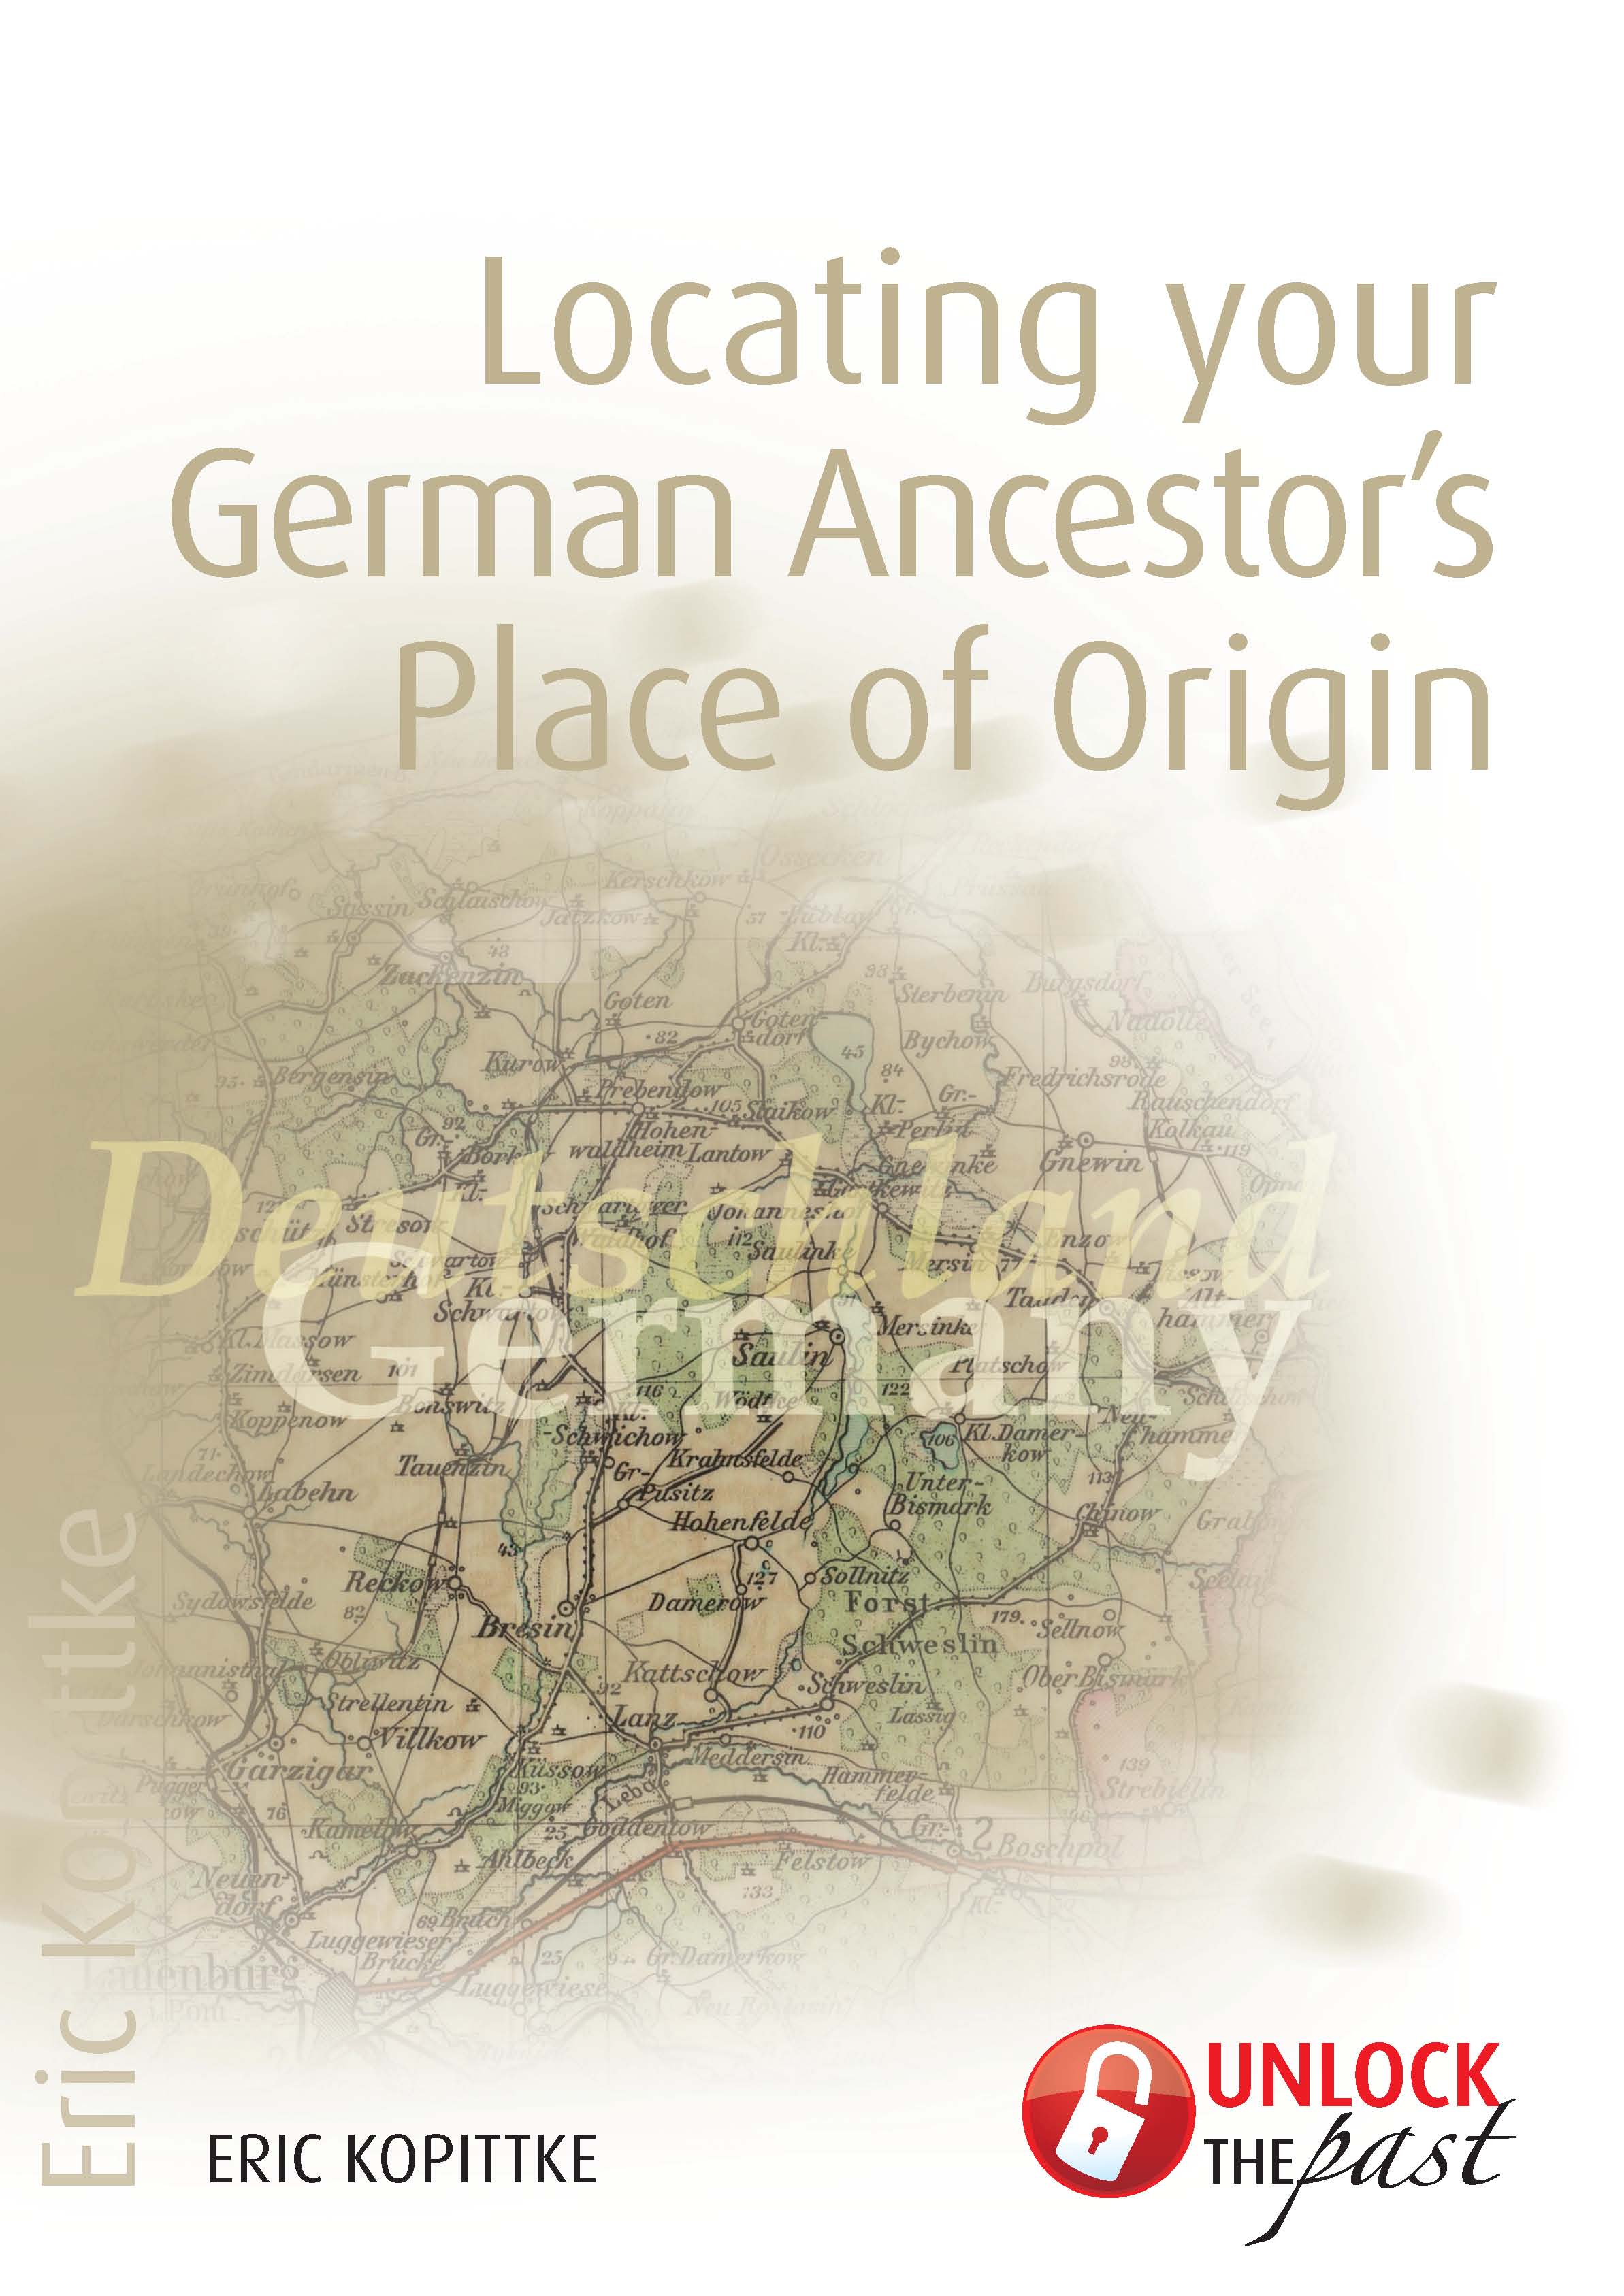 Locating Your German Ancestor's Place of Origin